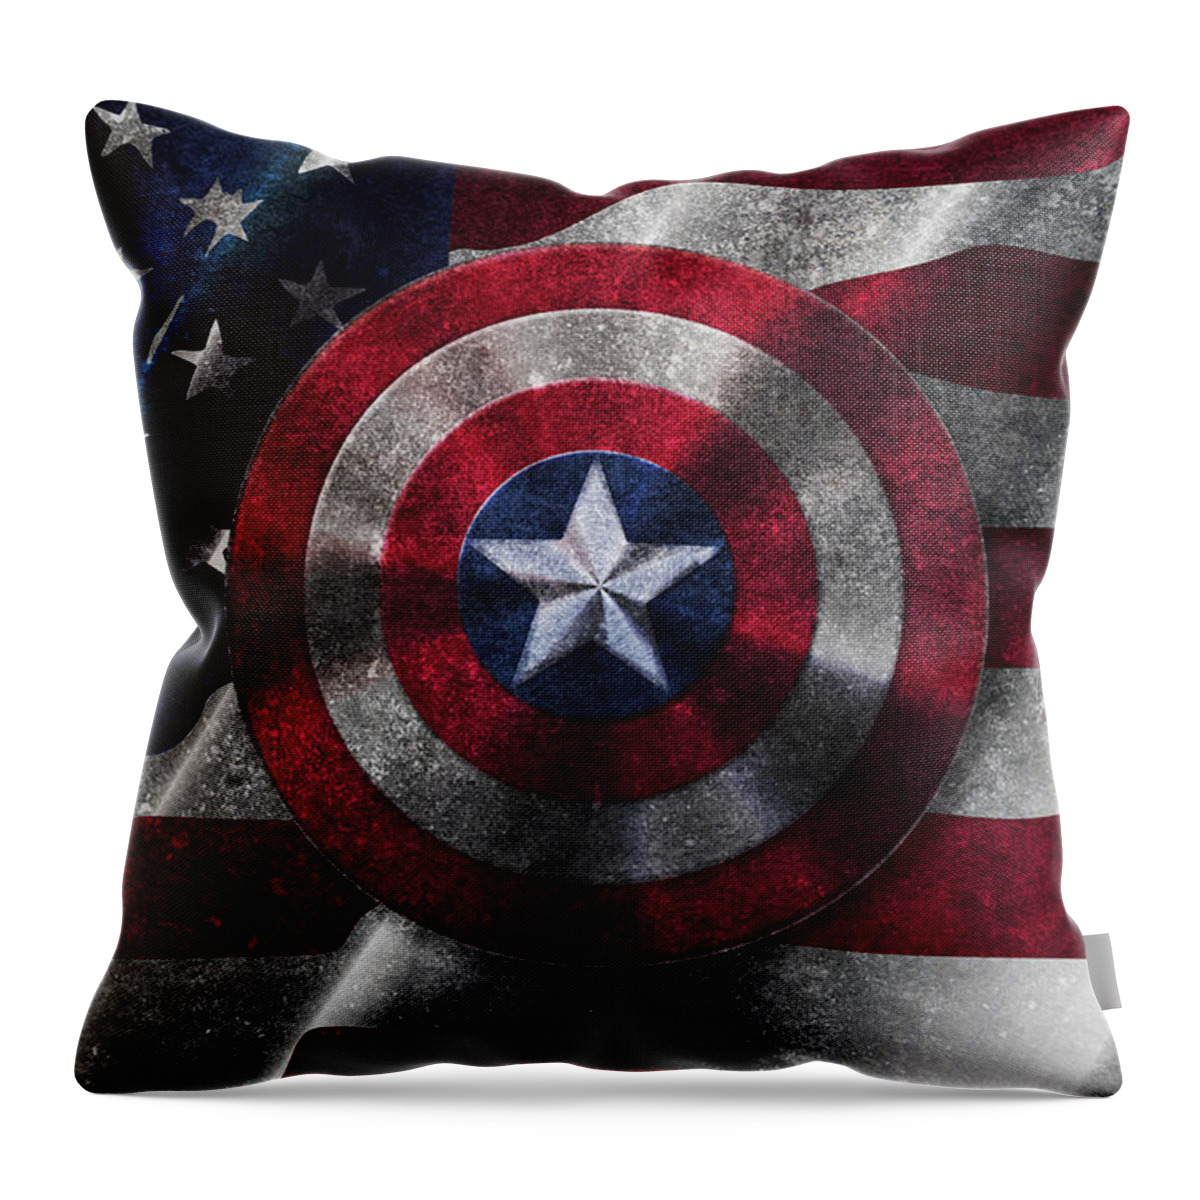 Captain America Shield Throw Pillow featuring the painting Captain America Shield on USA Flag by Georgeta Blanaru